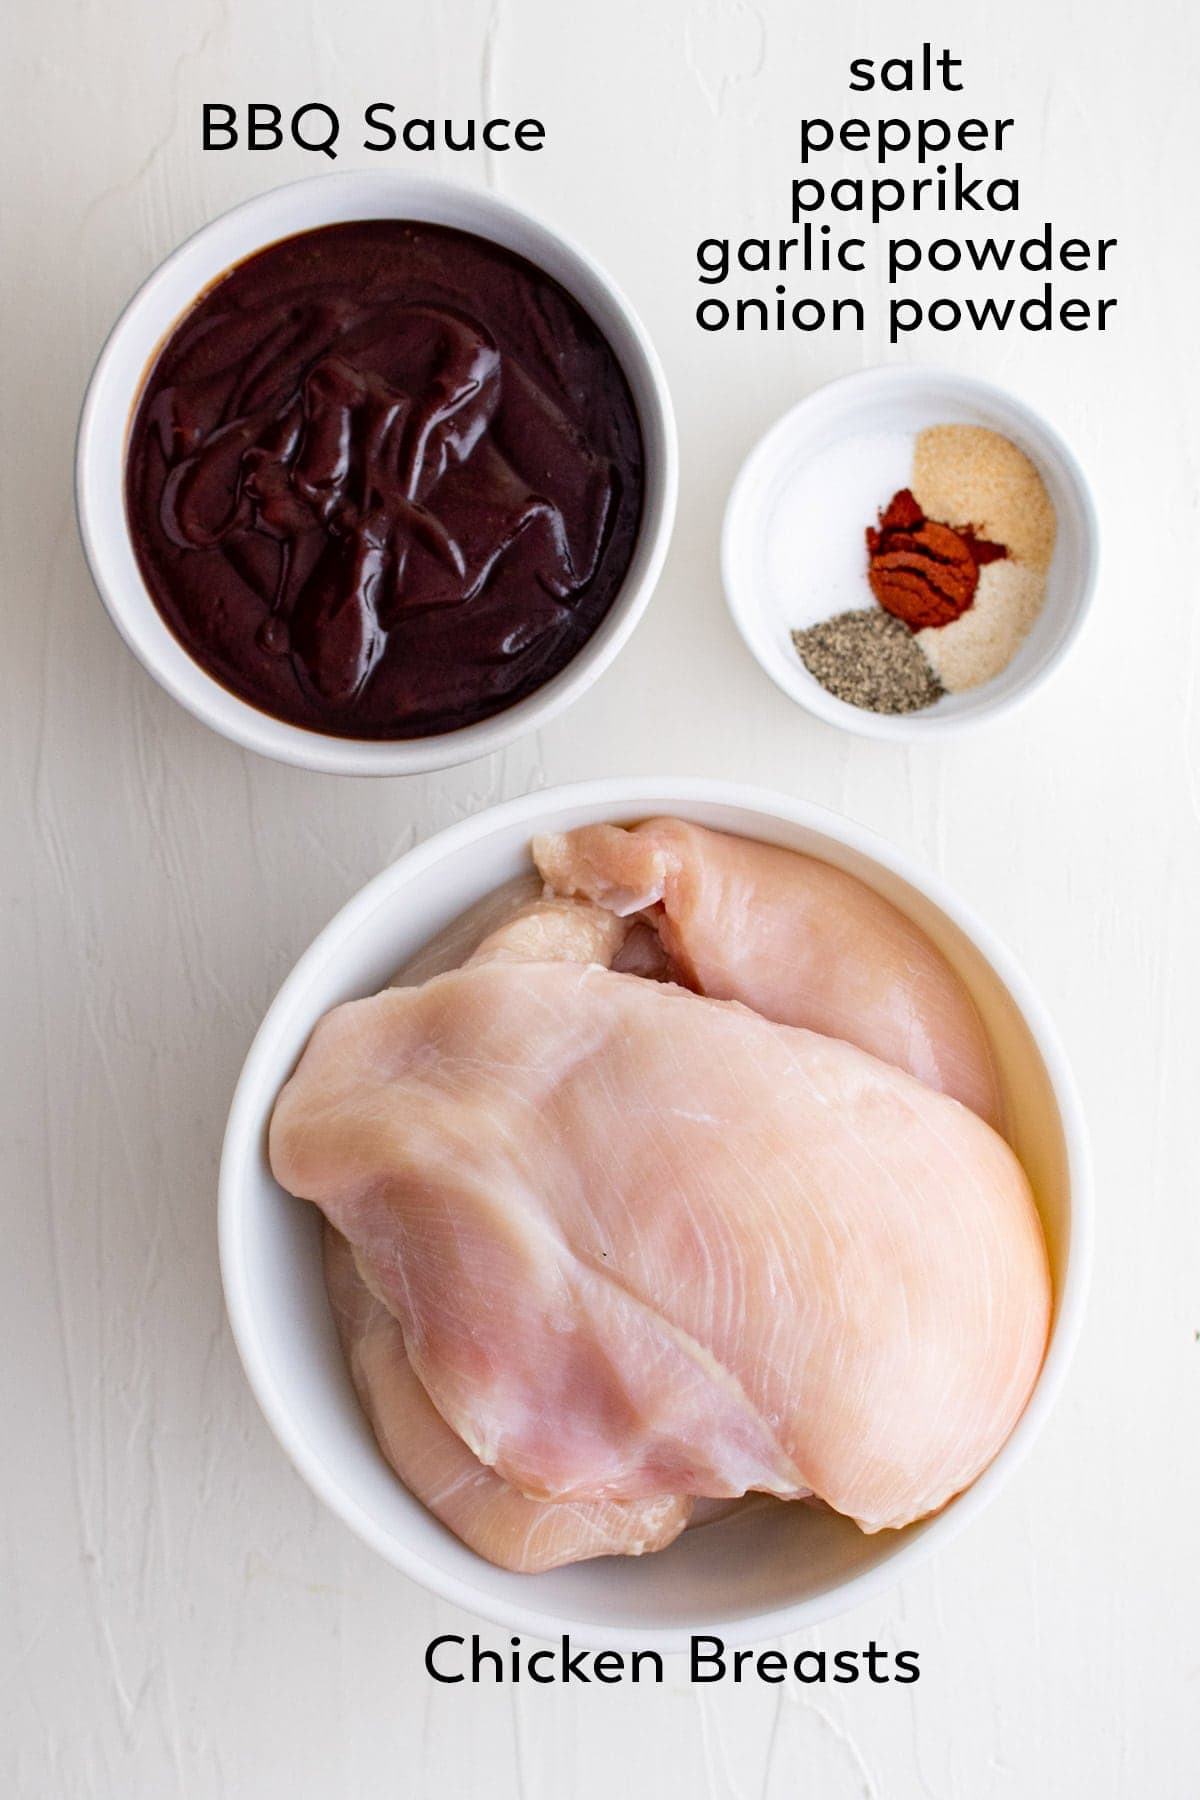 https://www.yellowblissroad.com/wp-content/uploads/2021/07/Baked-BBQ-Chicken-ingredients.jpg